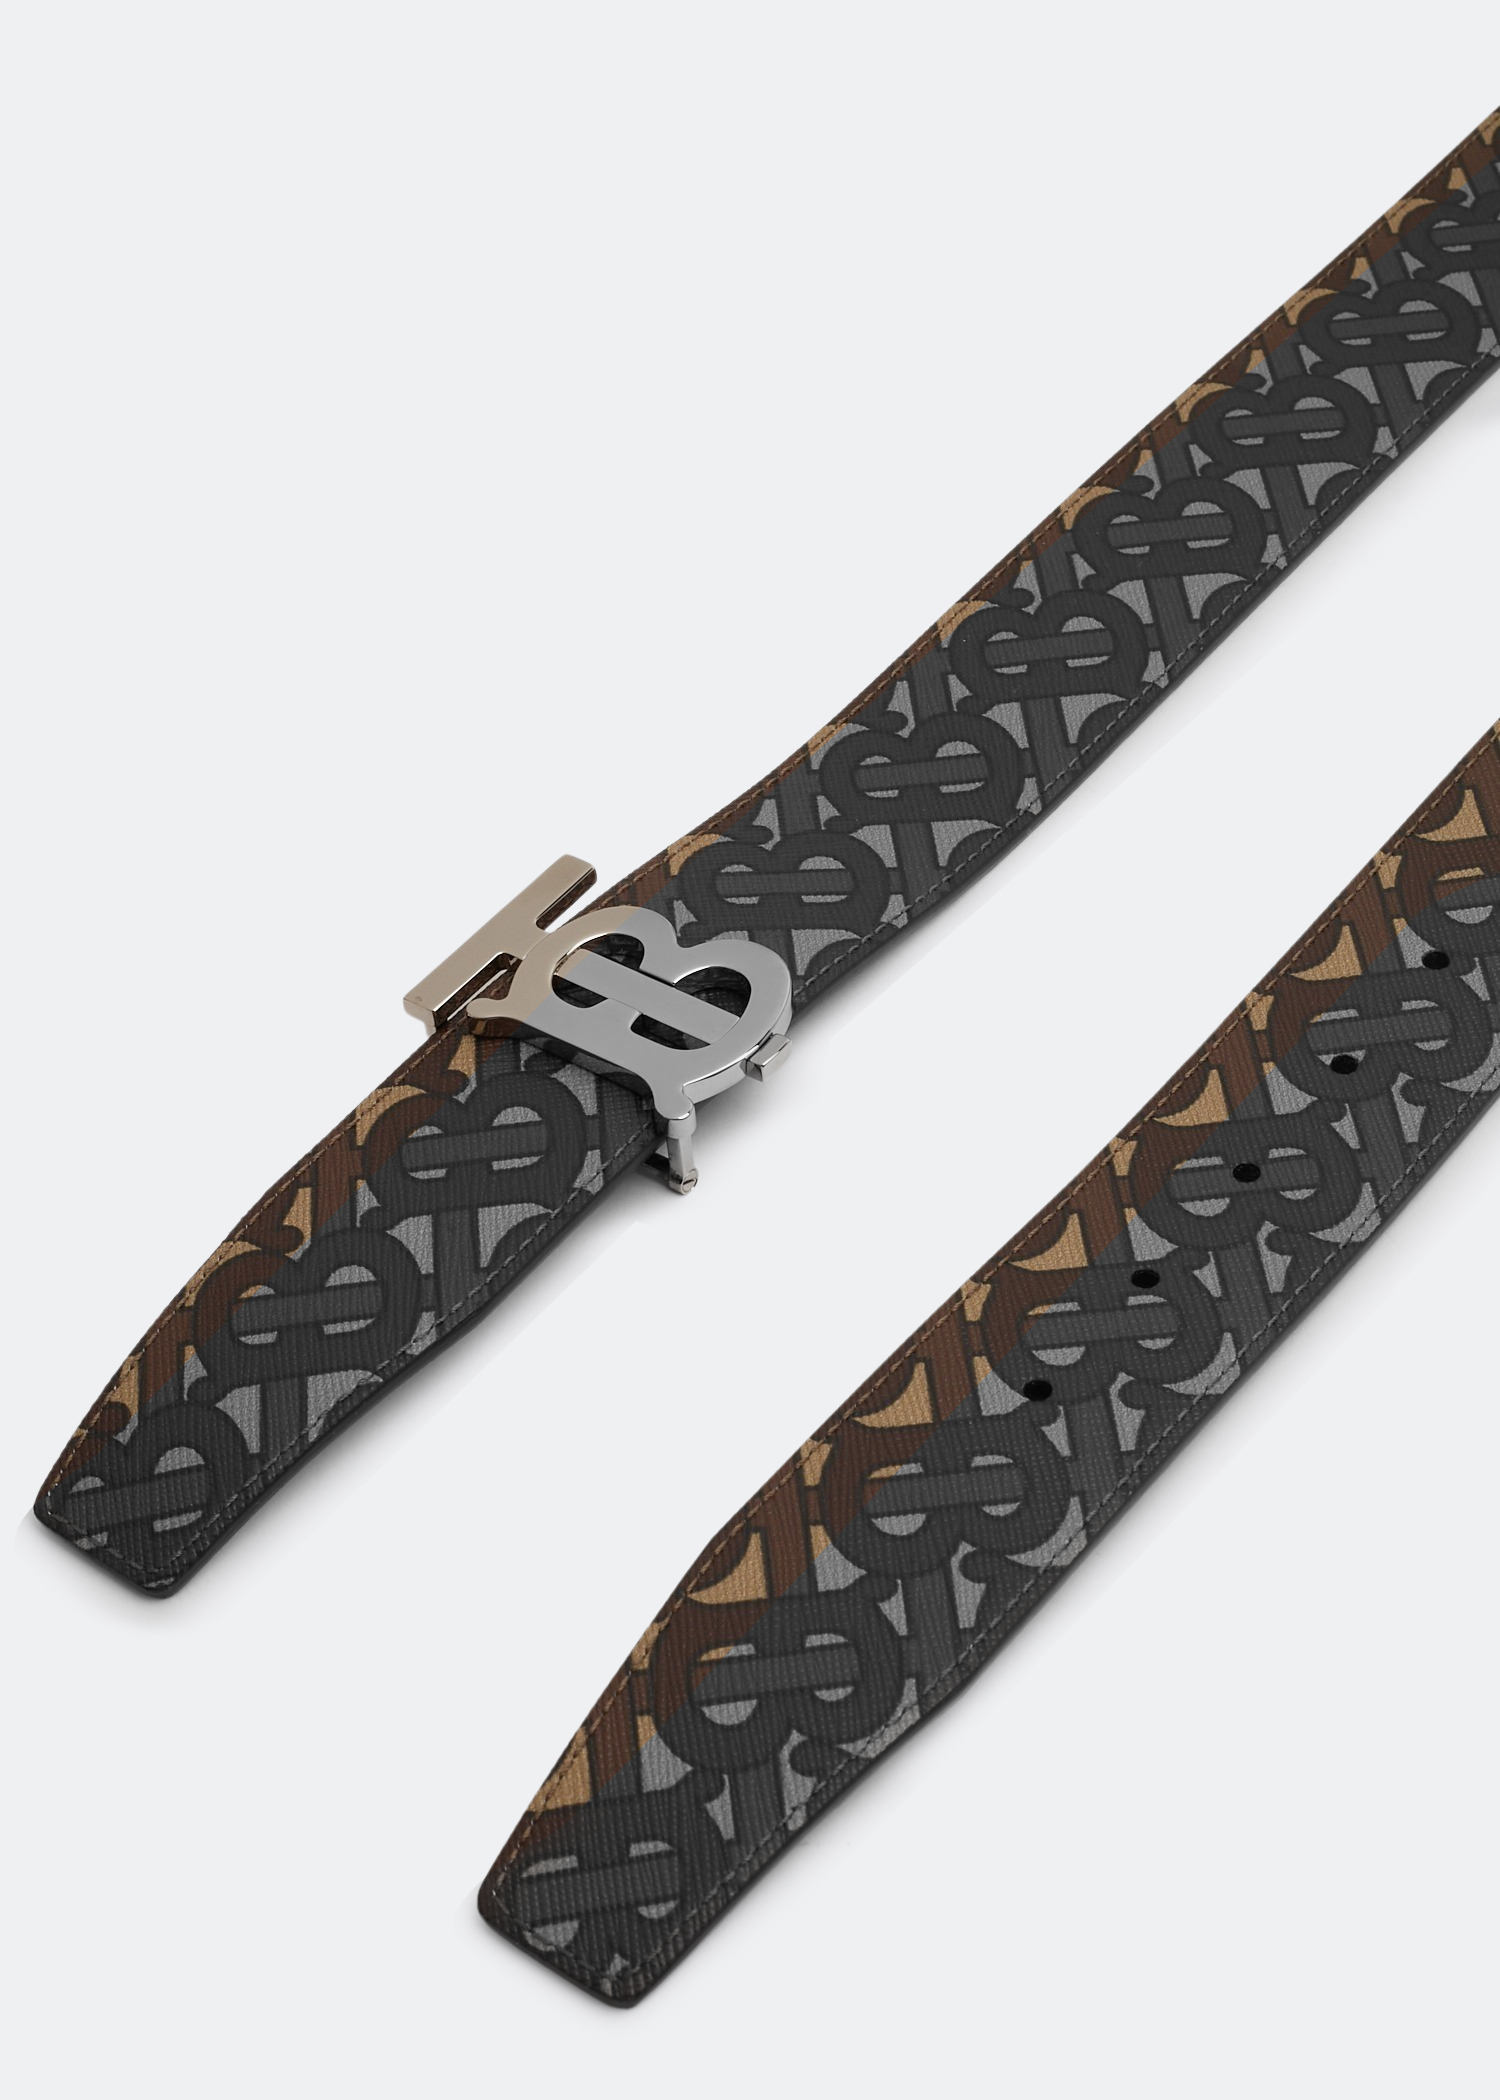 Burberry Men's Black Reversible Monogram Leather Belt